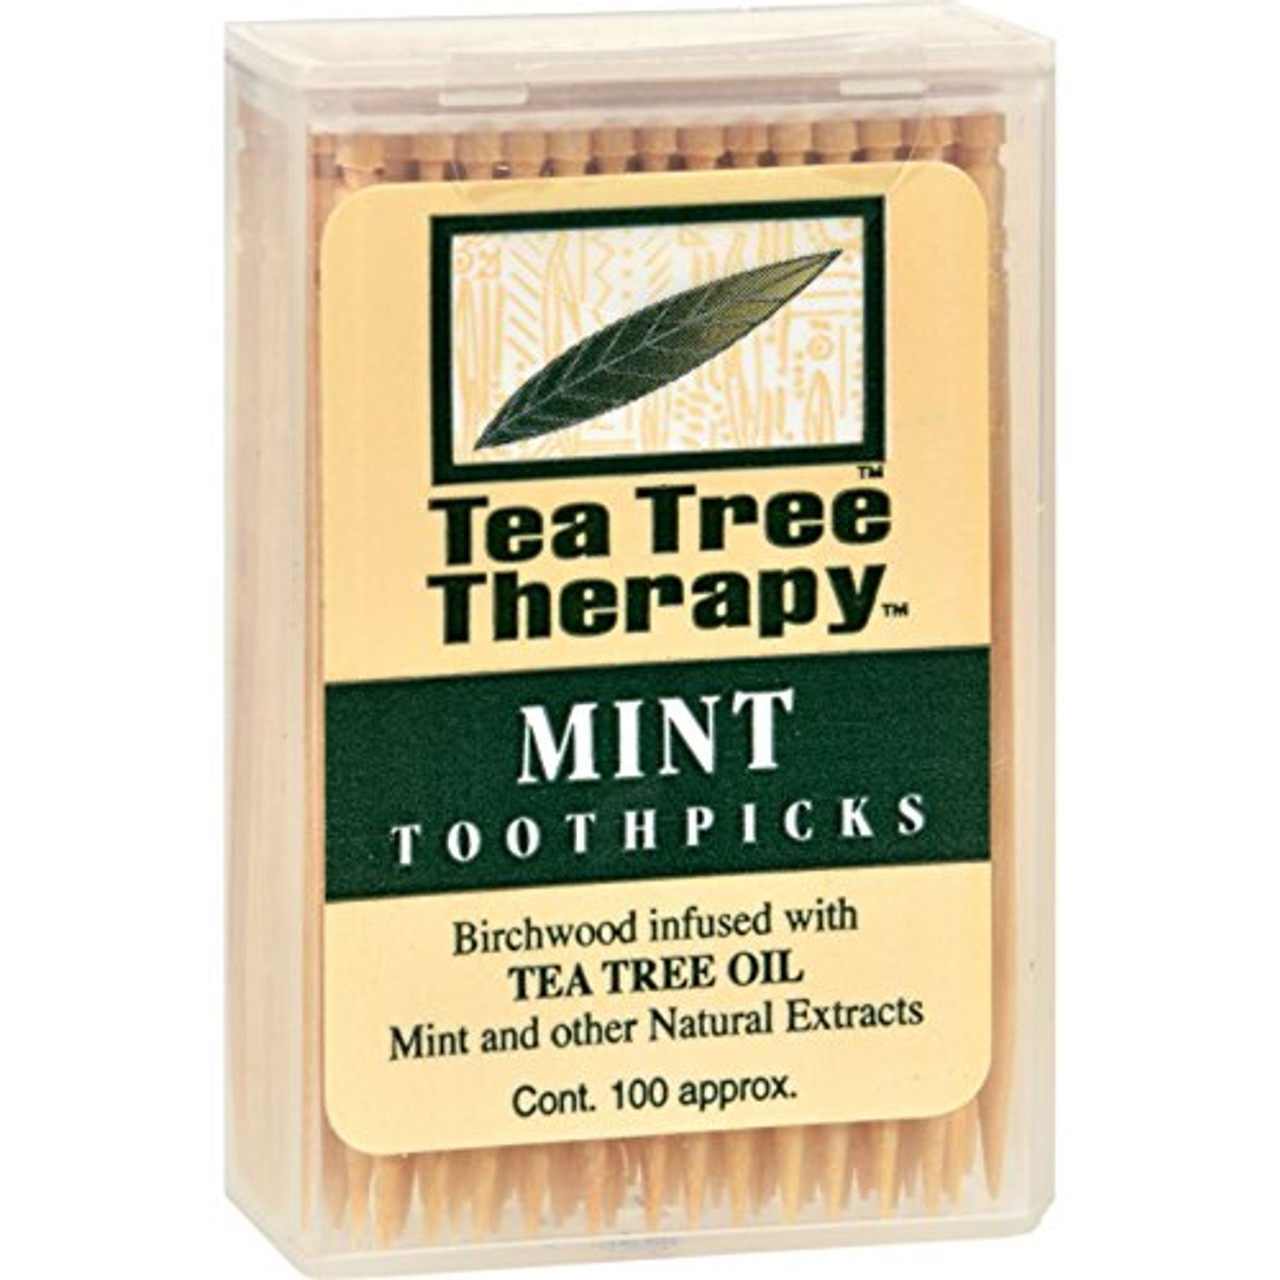 tea tree therapy toothpicks